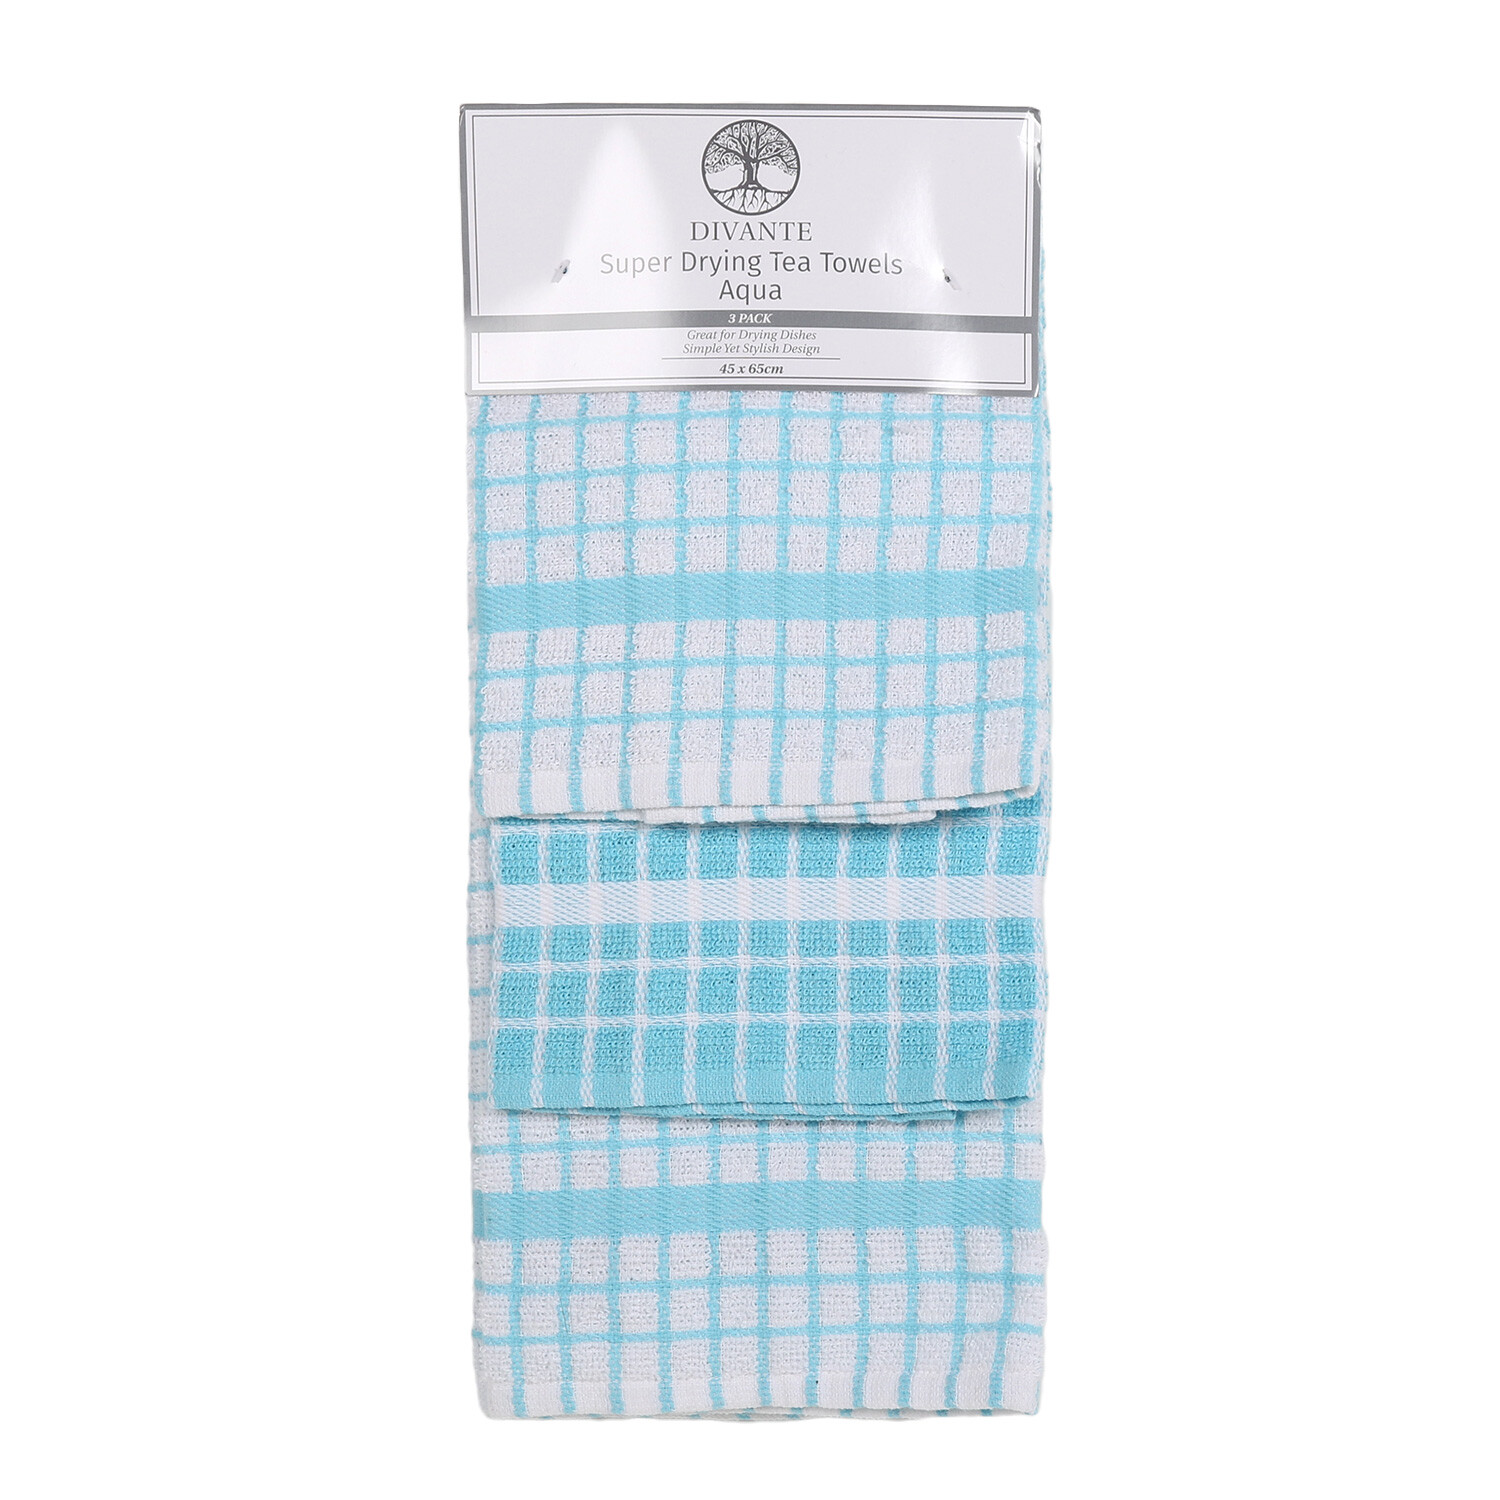 Pack of 3 Super Drying Tea Towels - Aqua Image